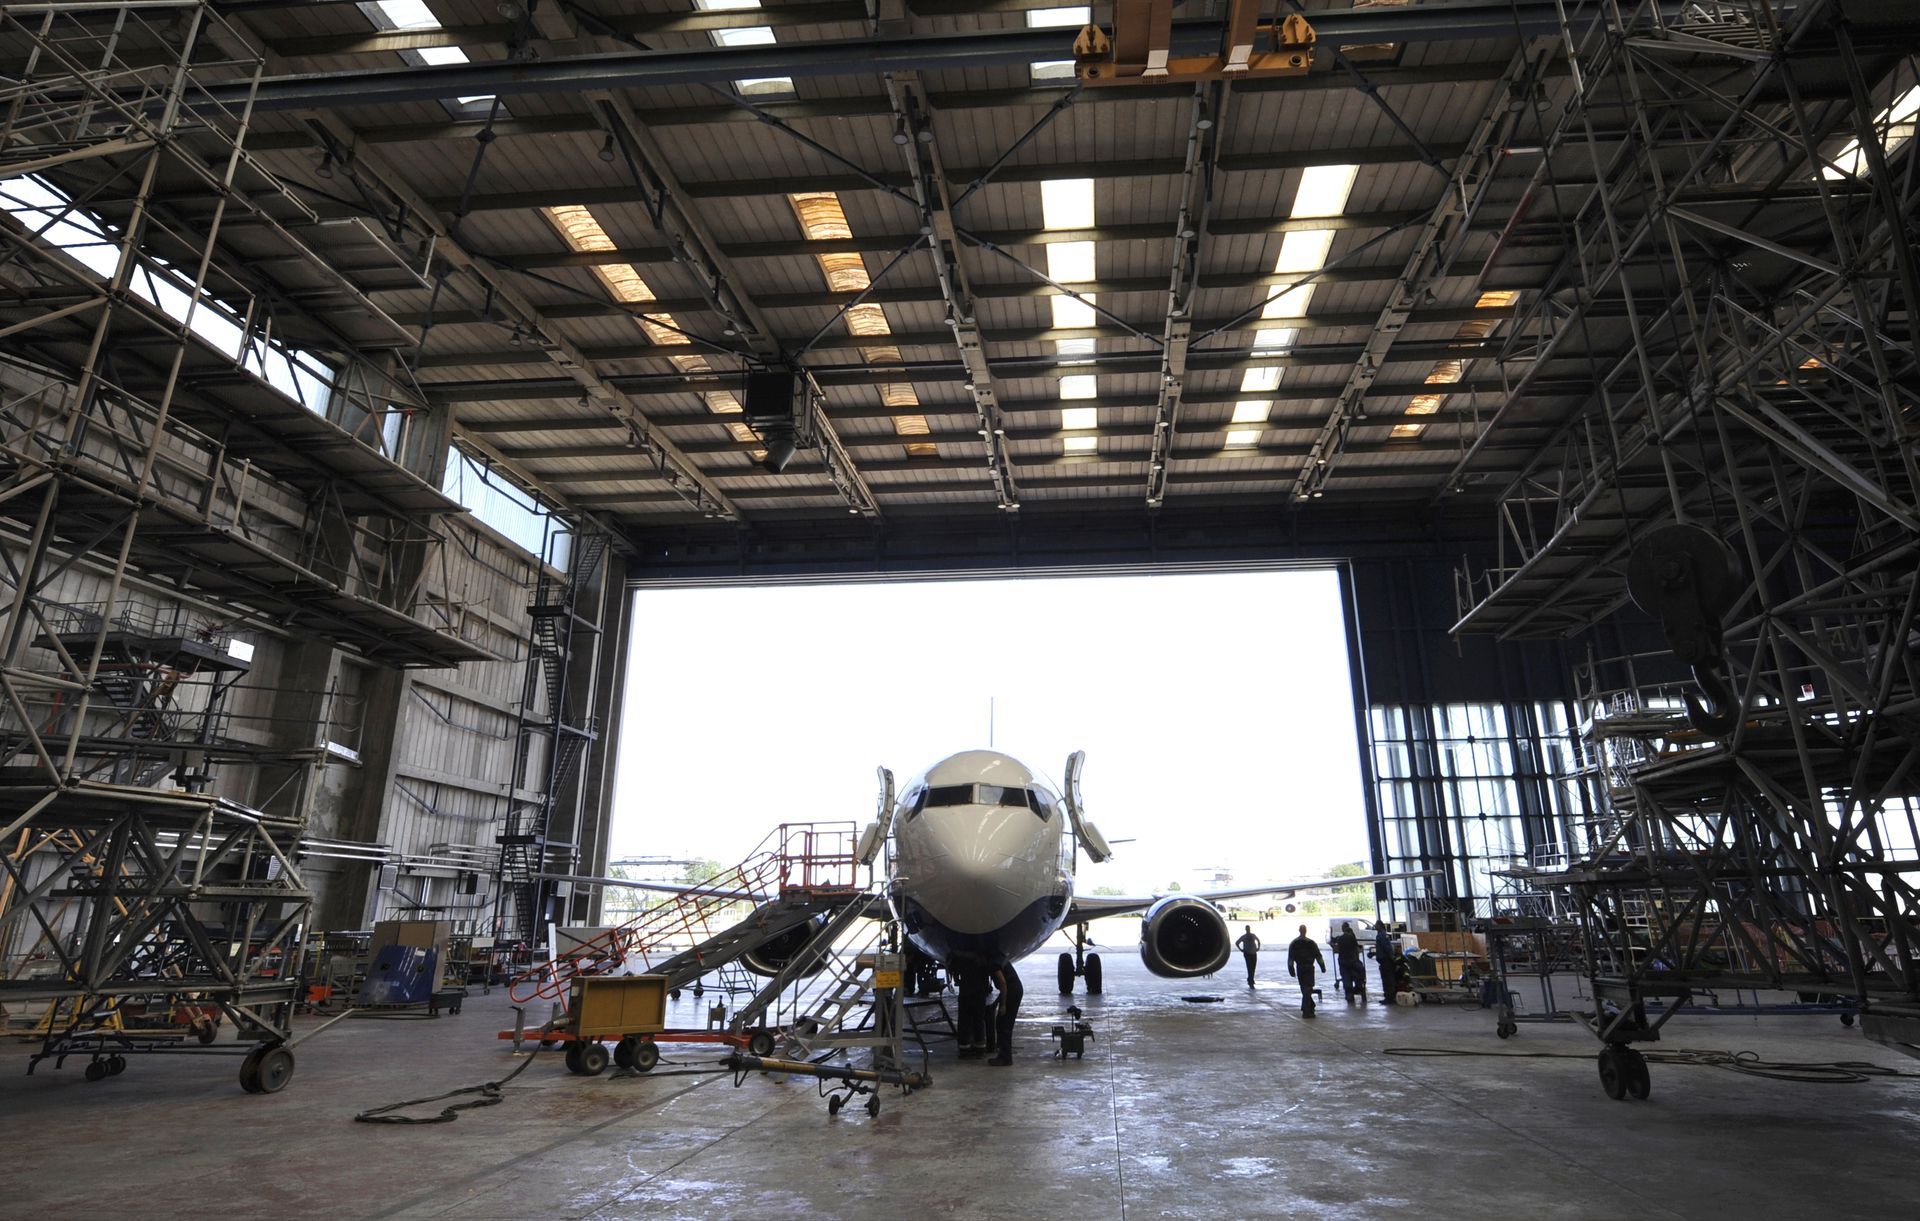 Inside the Aerospace Hangar